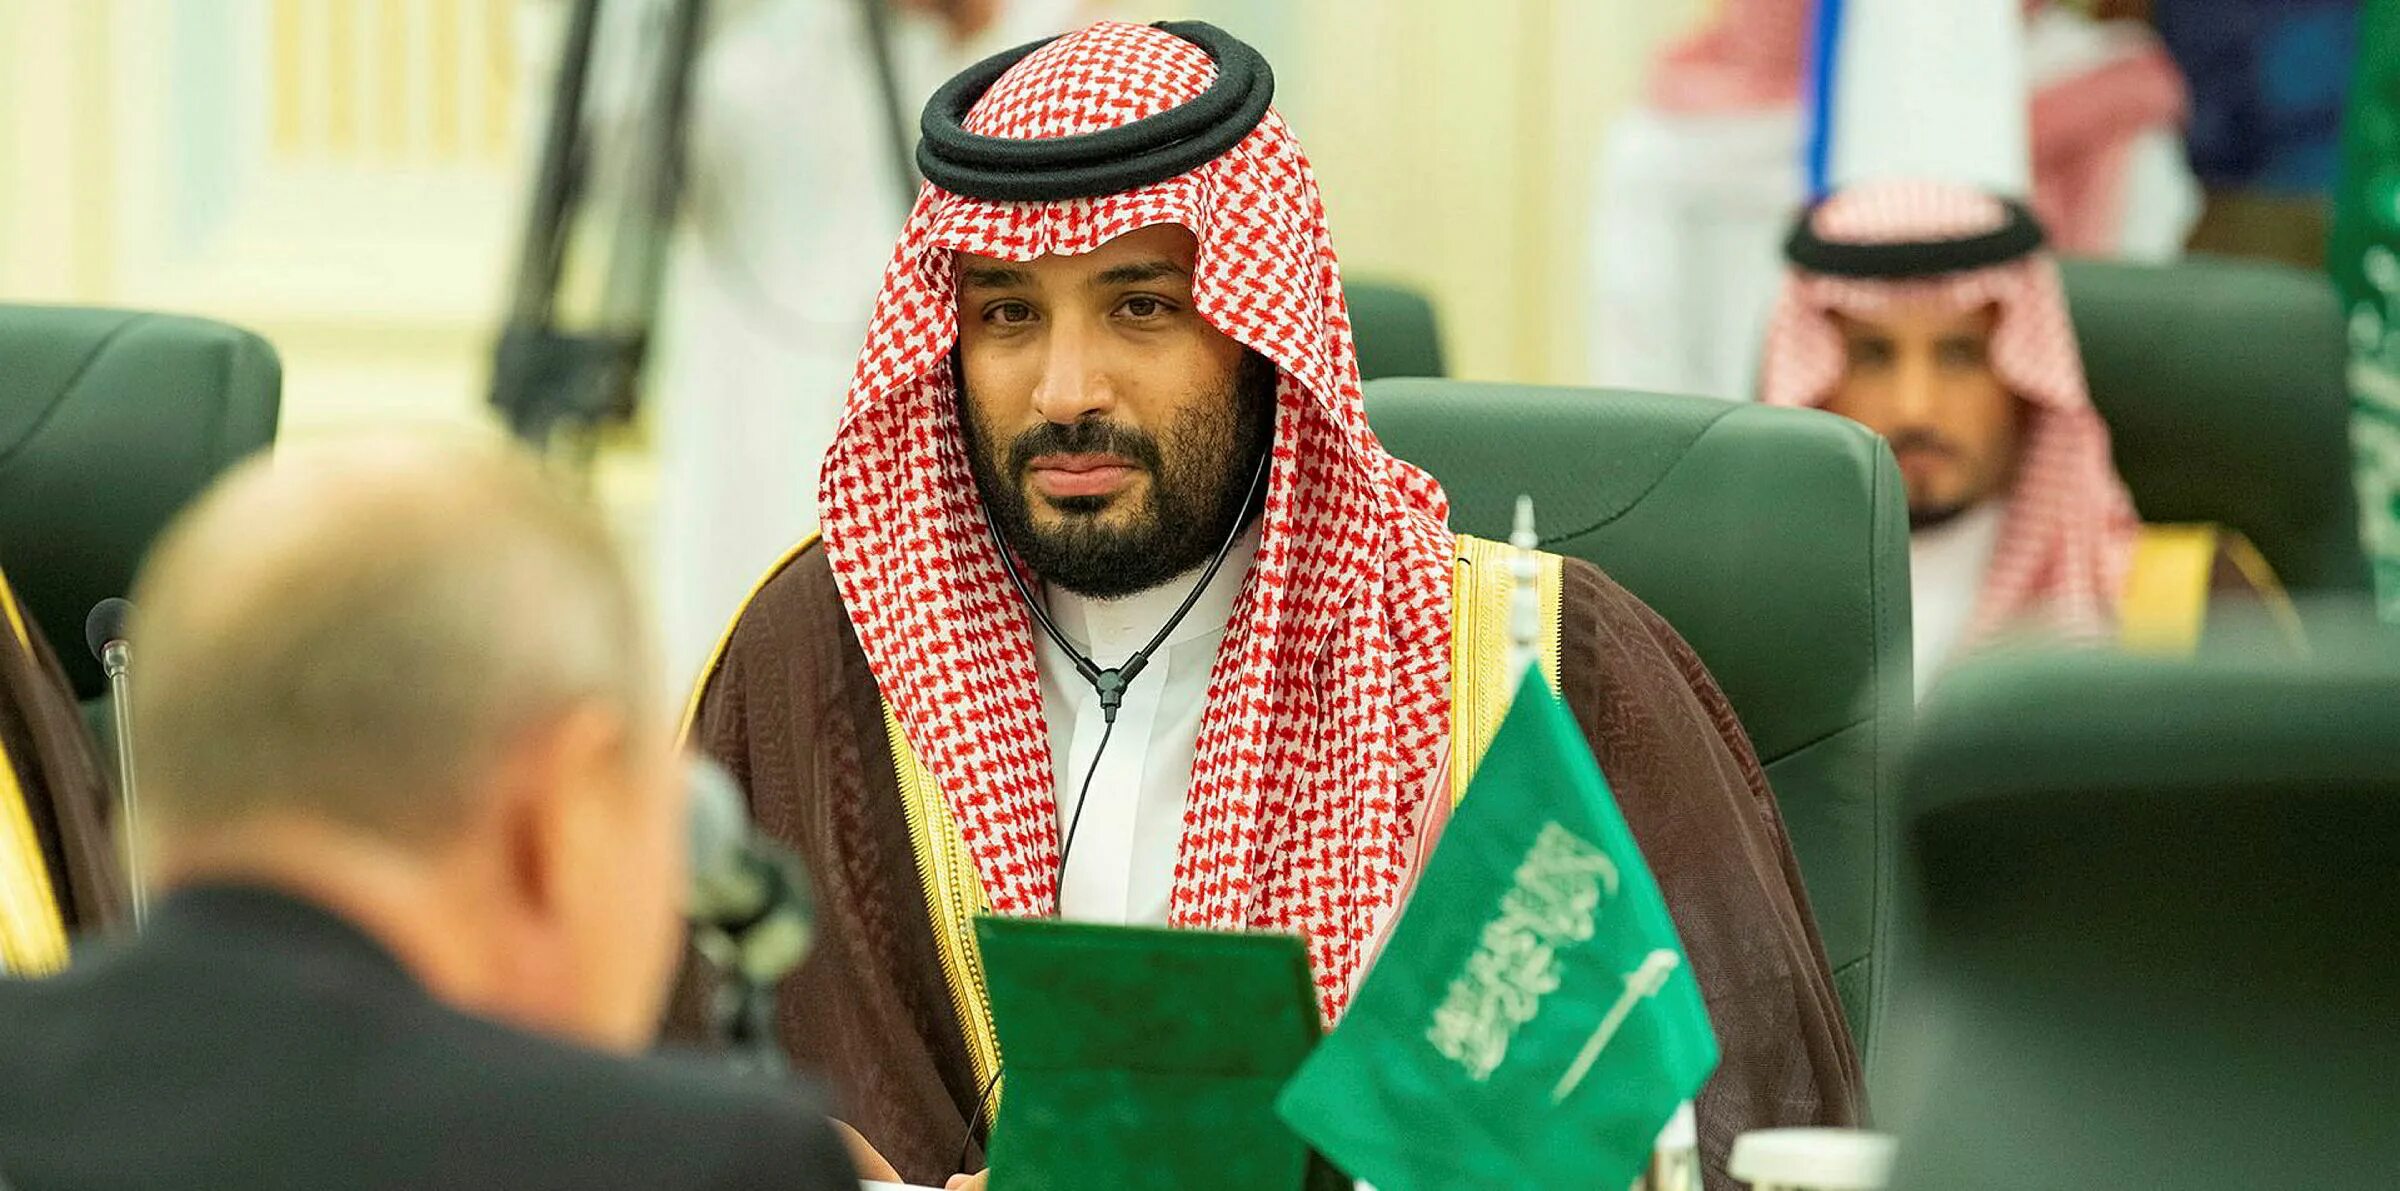 Мухаммед ибн Салман Аль Сауд. Саудовский принц Мухаммед Бен Салман. Наследный принц Мухаммед Бин Салман. Принц Саудовской Аравии Мухаммед. Саудовская аравия вопросы